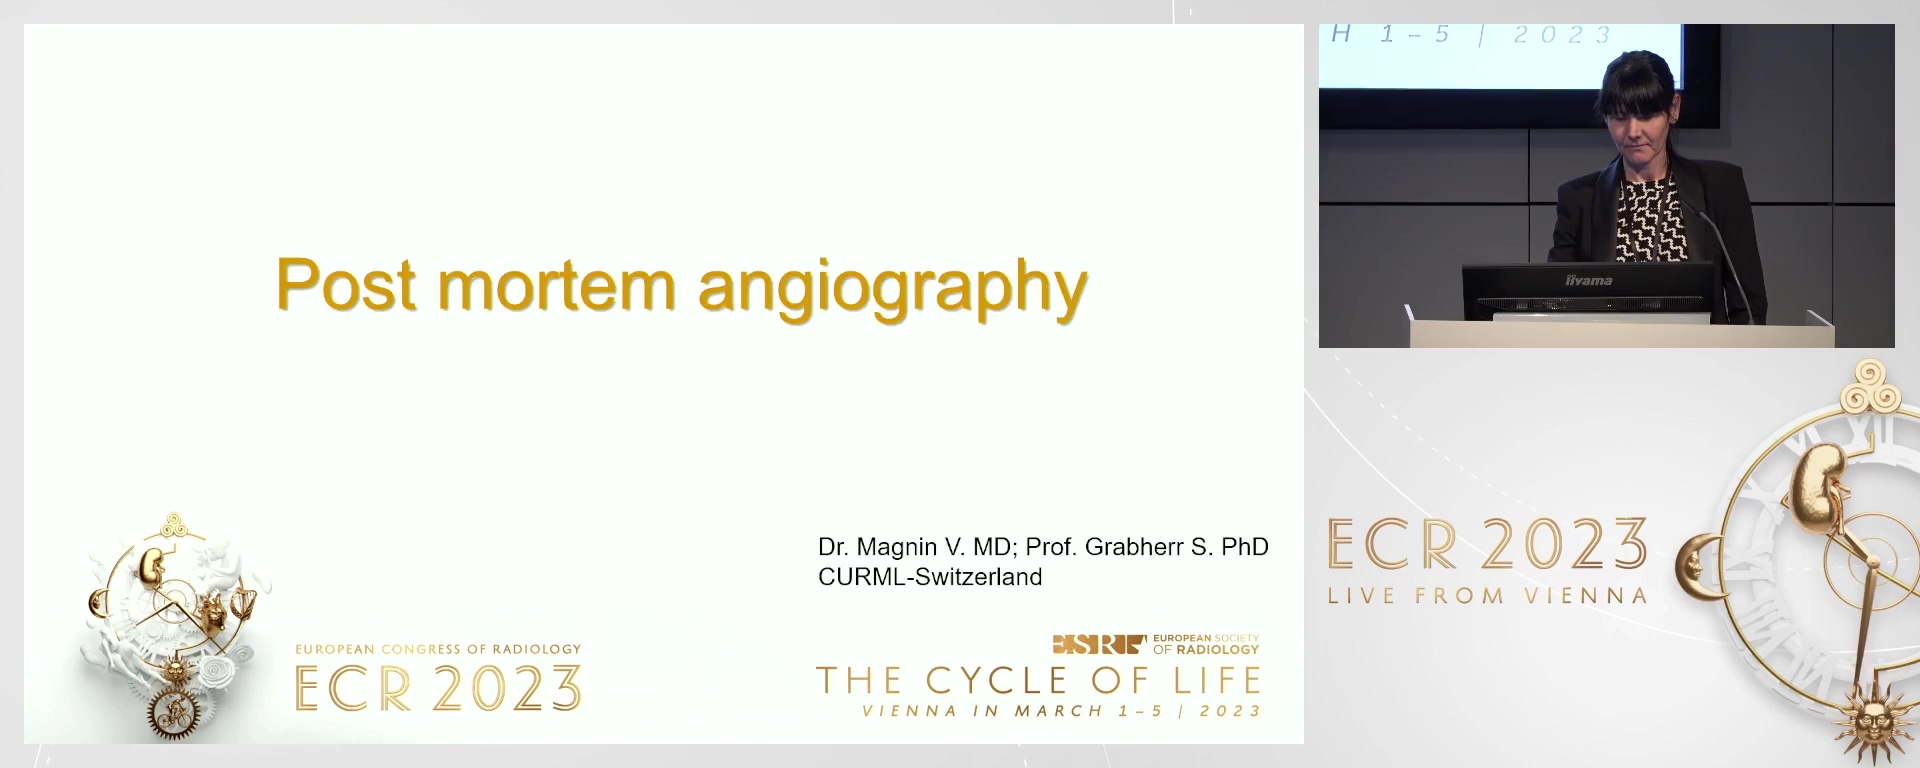 Postmortem CT angiography